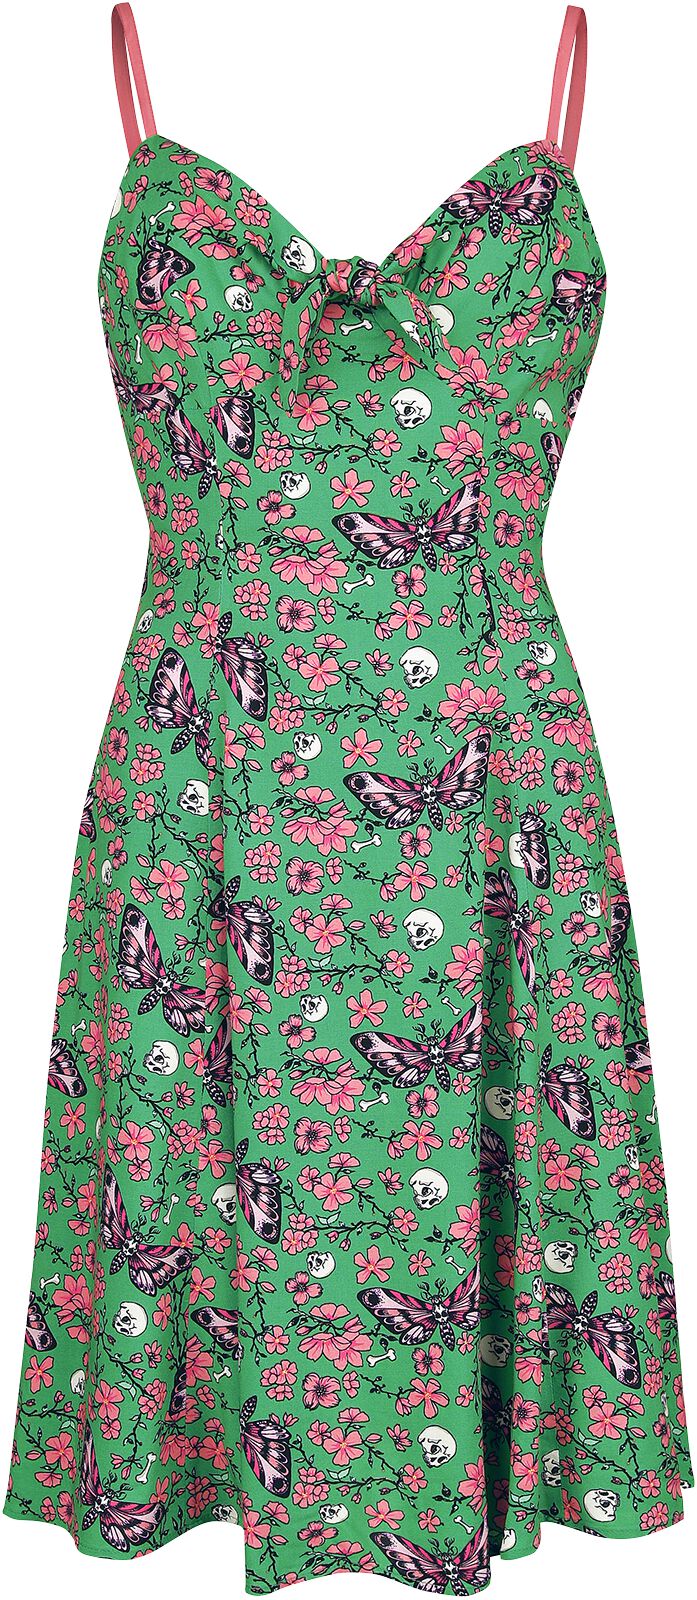 Robe mi-longue de Hell Bunny - Madilynn Knee Dress - XS à 4XL - pour Femme - vert/rose